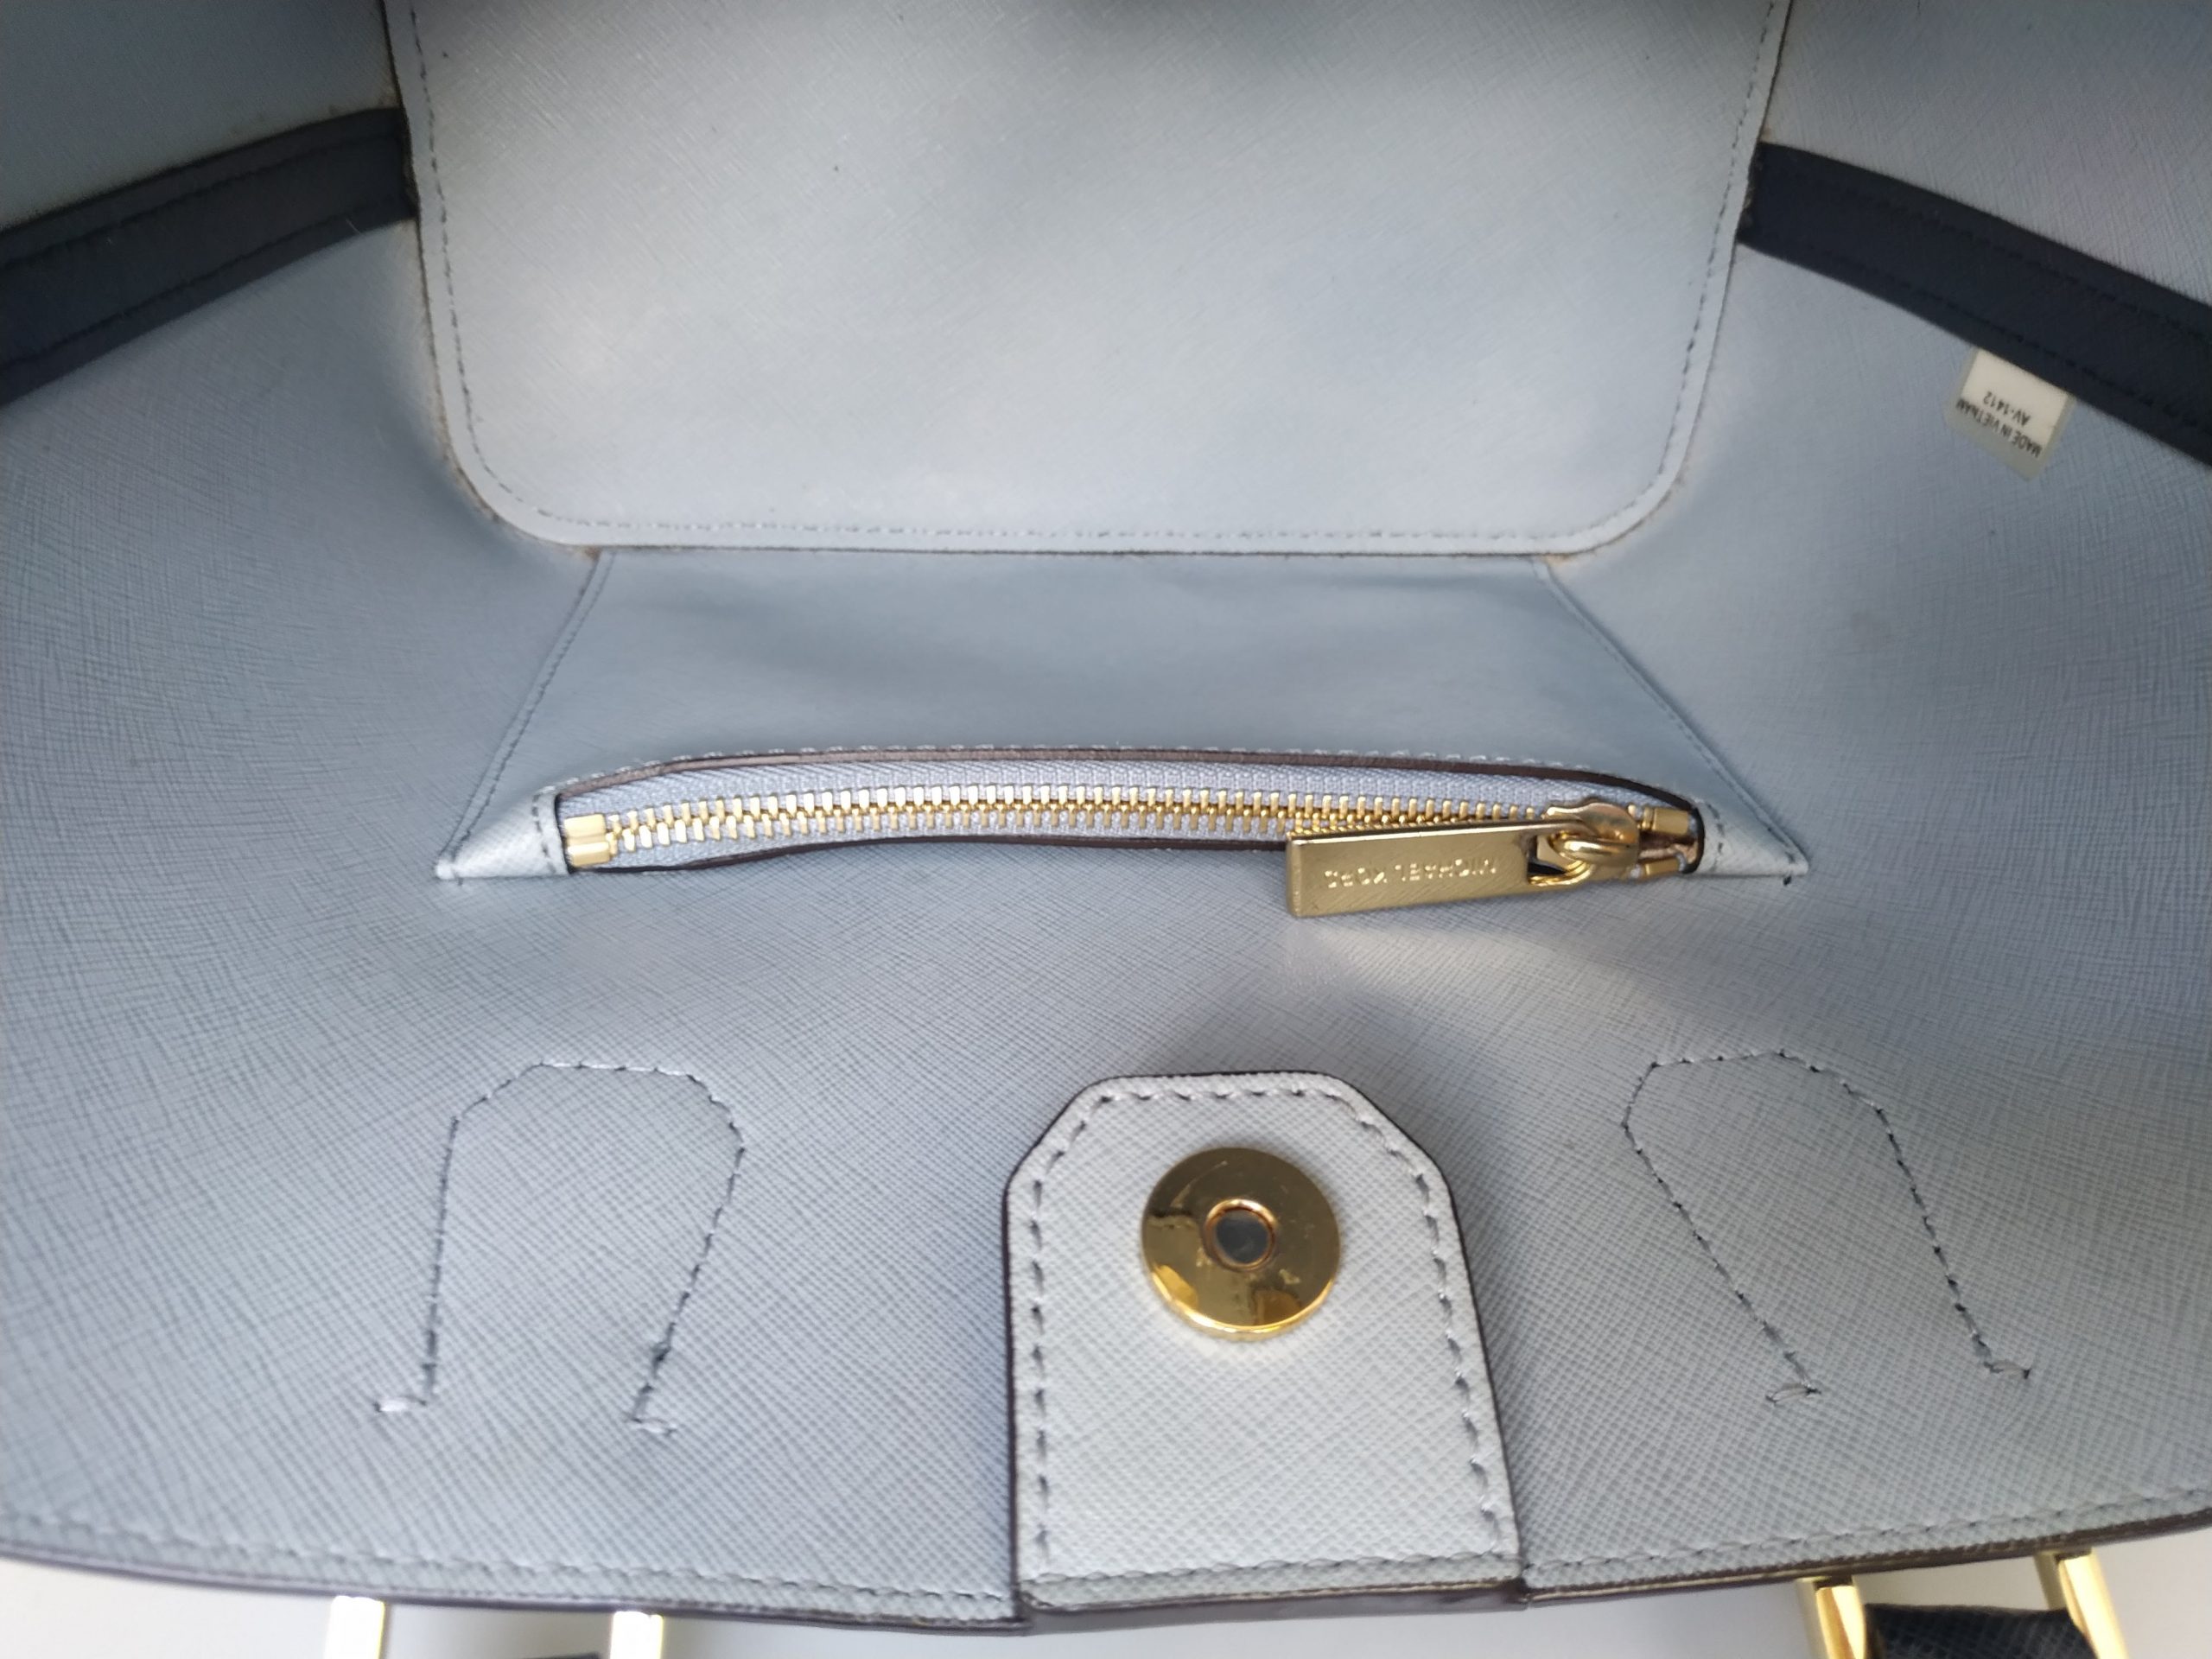 Michael Kors Greenwich Large Grab Bag Silver: : Fashion